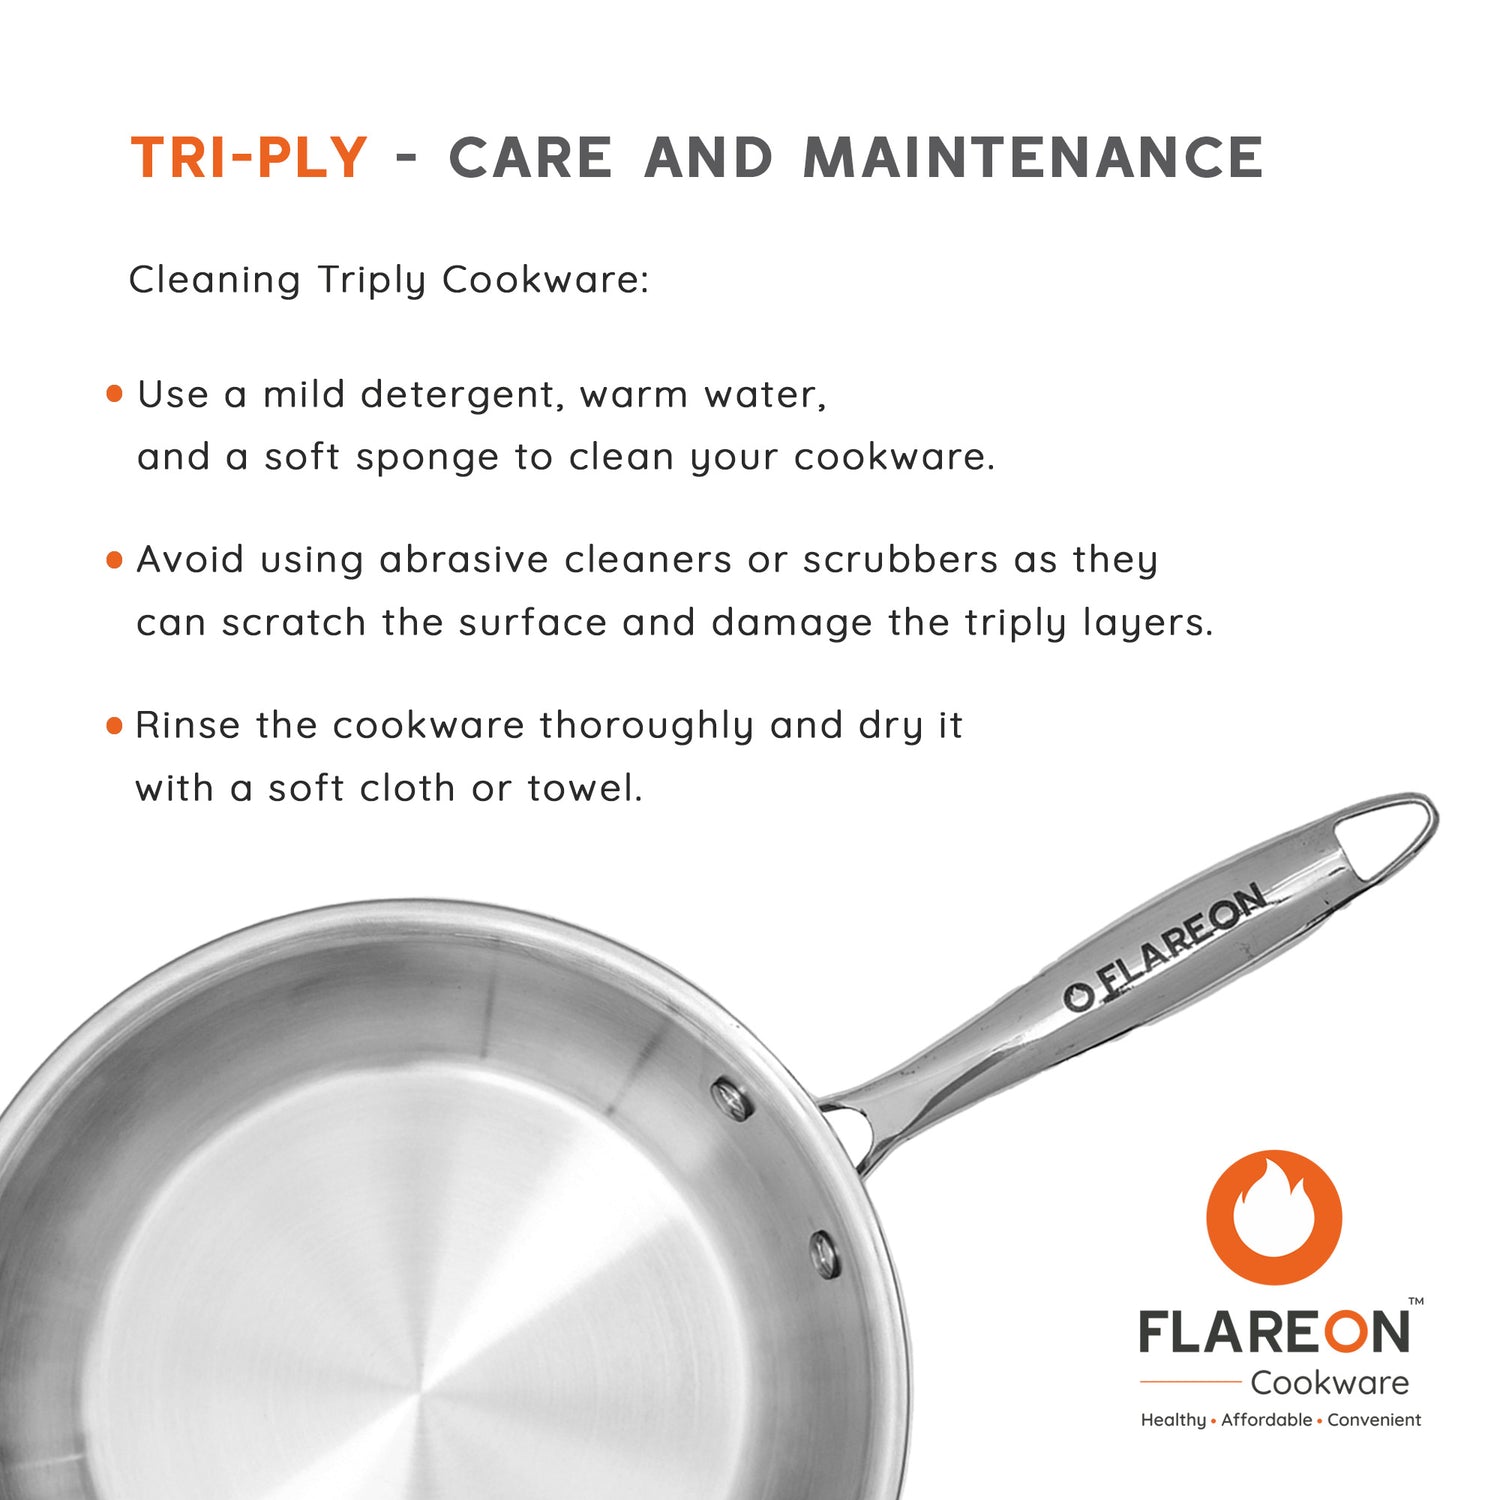 FlareOn's TriPly SS Fry Pan 22 Cm- Care & Maintenance